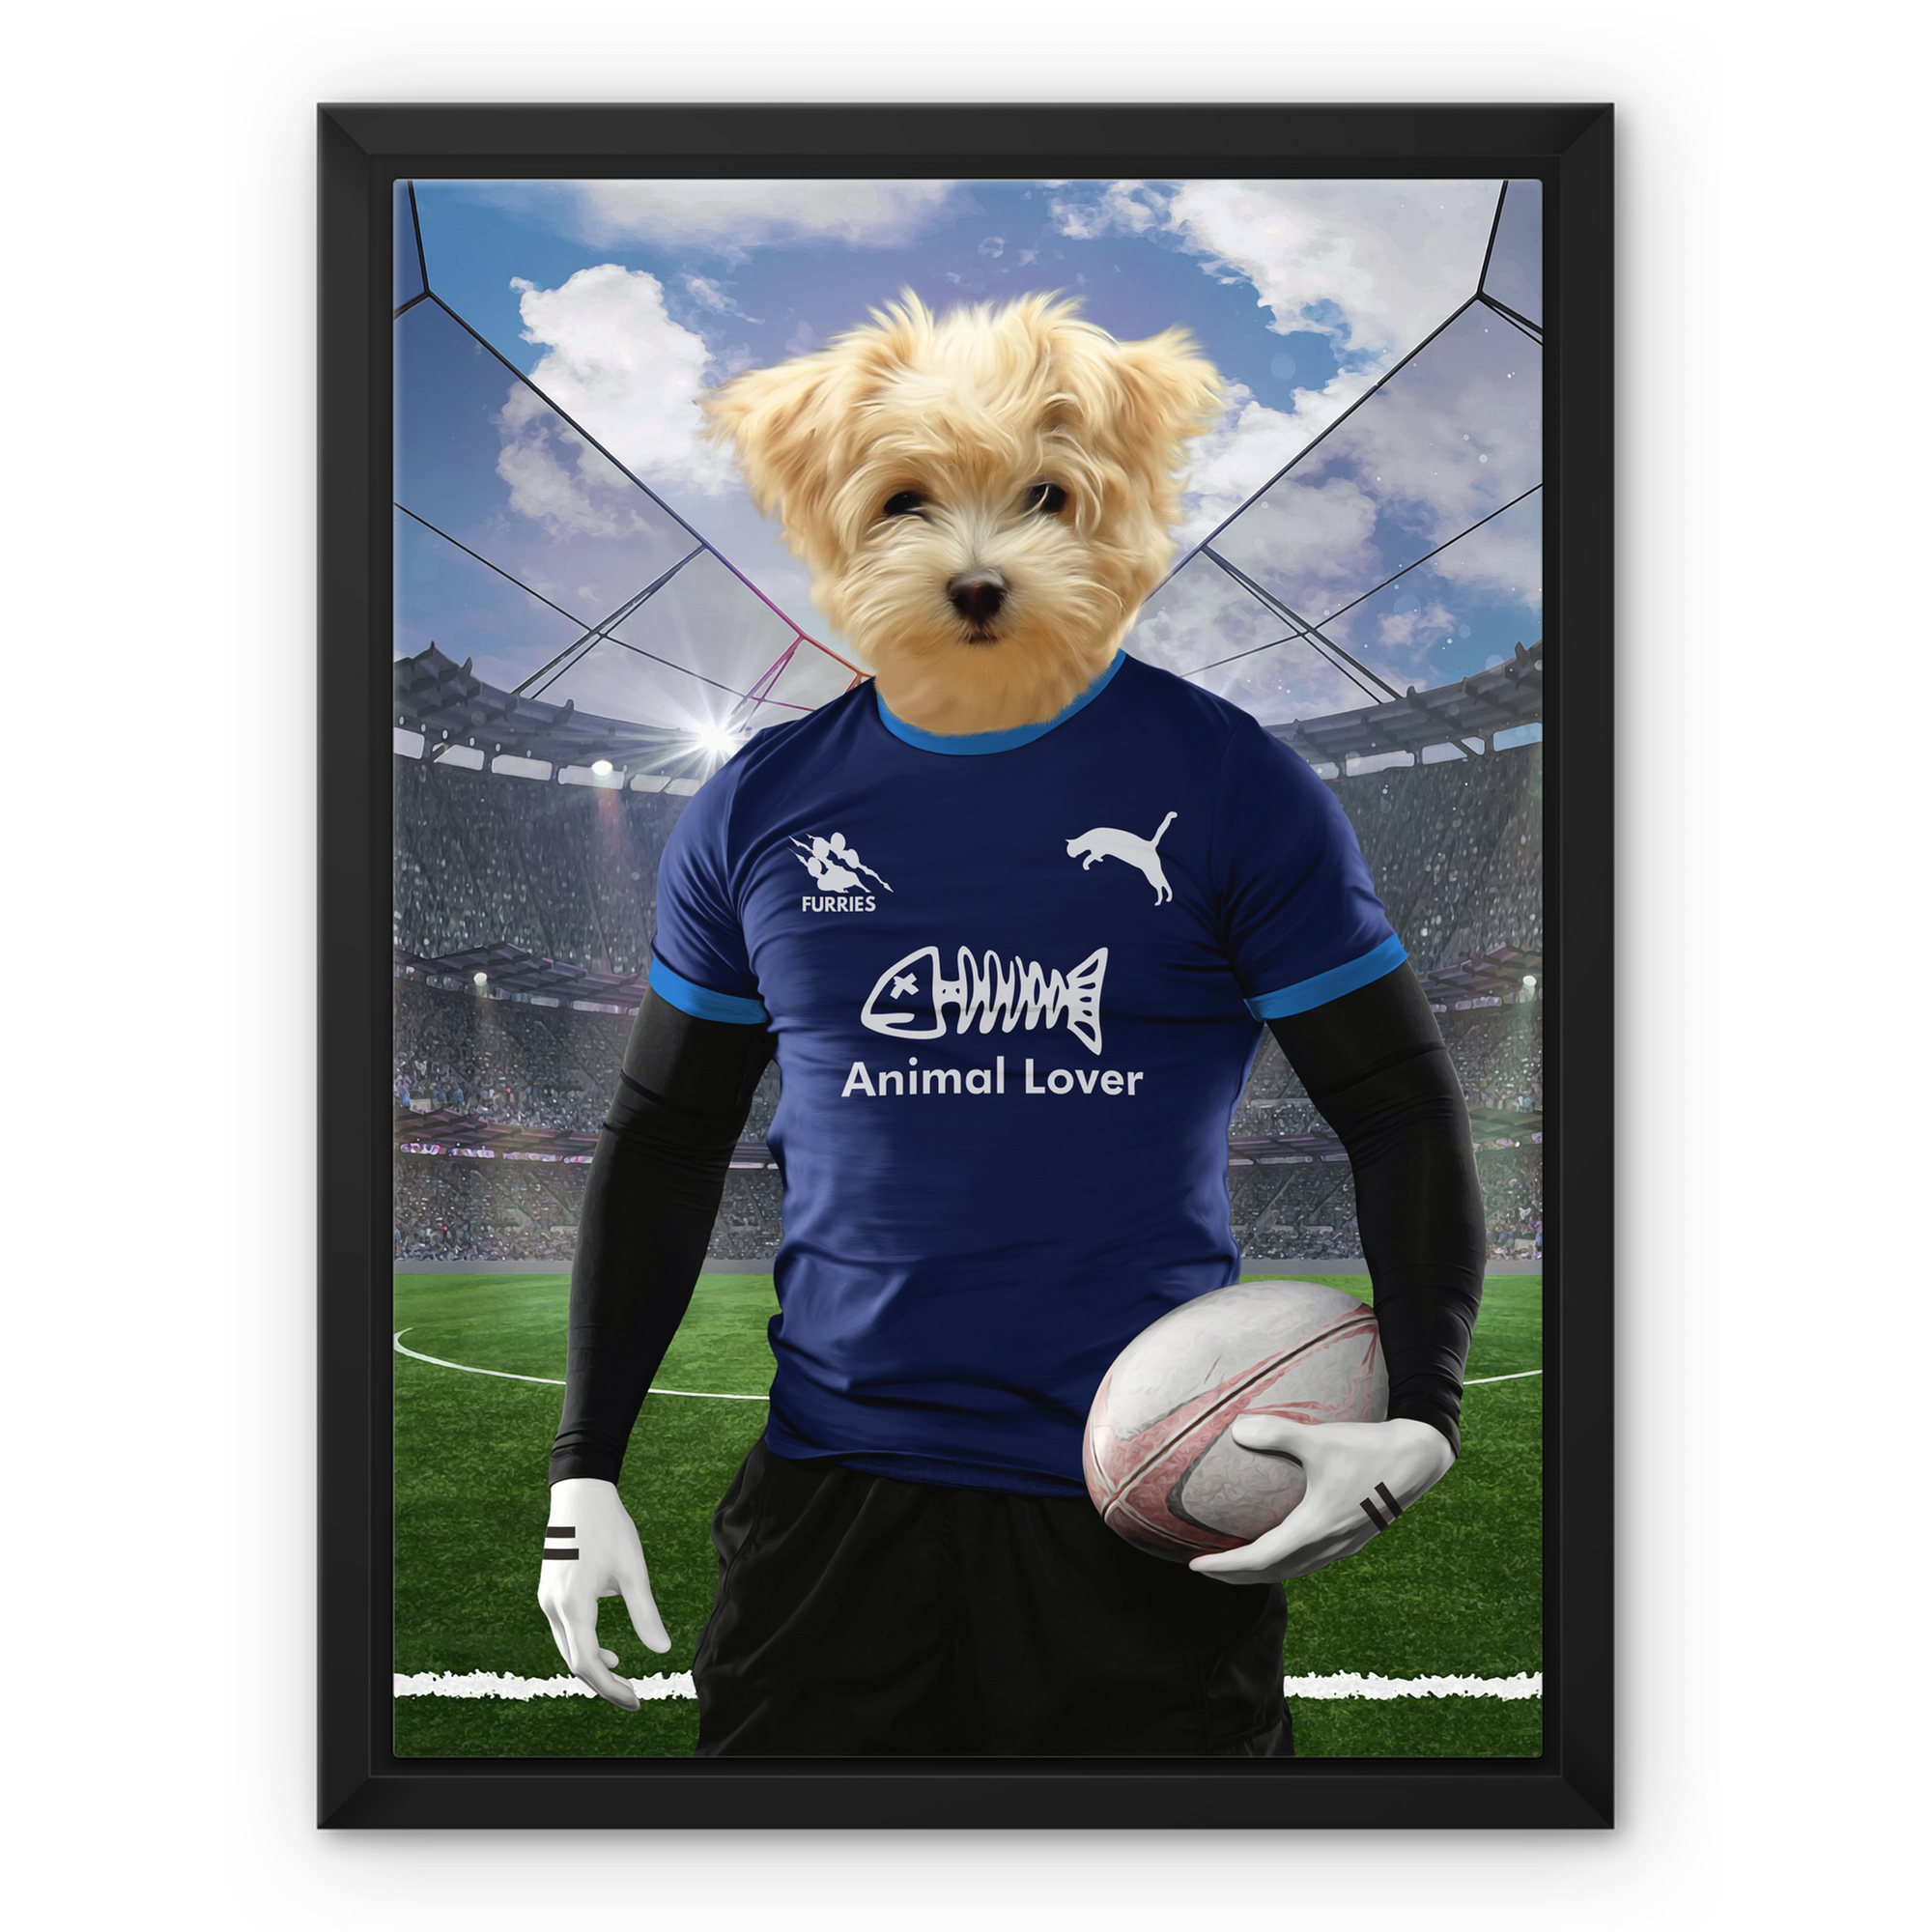 Scotland Rugby Team: Paw & Glory, pawandglory, custom pet painting, dog canvas art, paintings of pets from photos, custom dog painting, pet portraits, funny dog paintings, small dog portrait